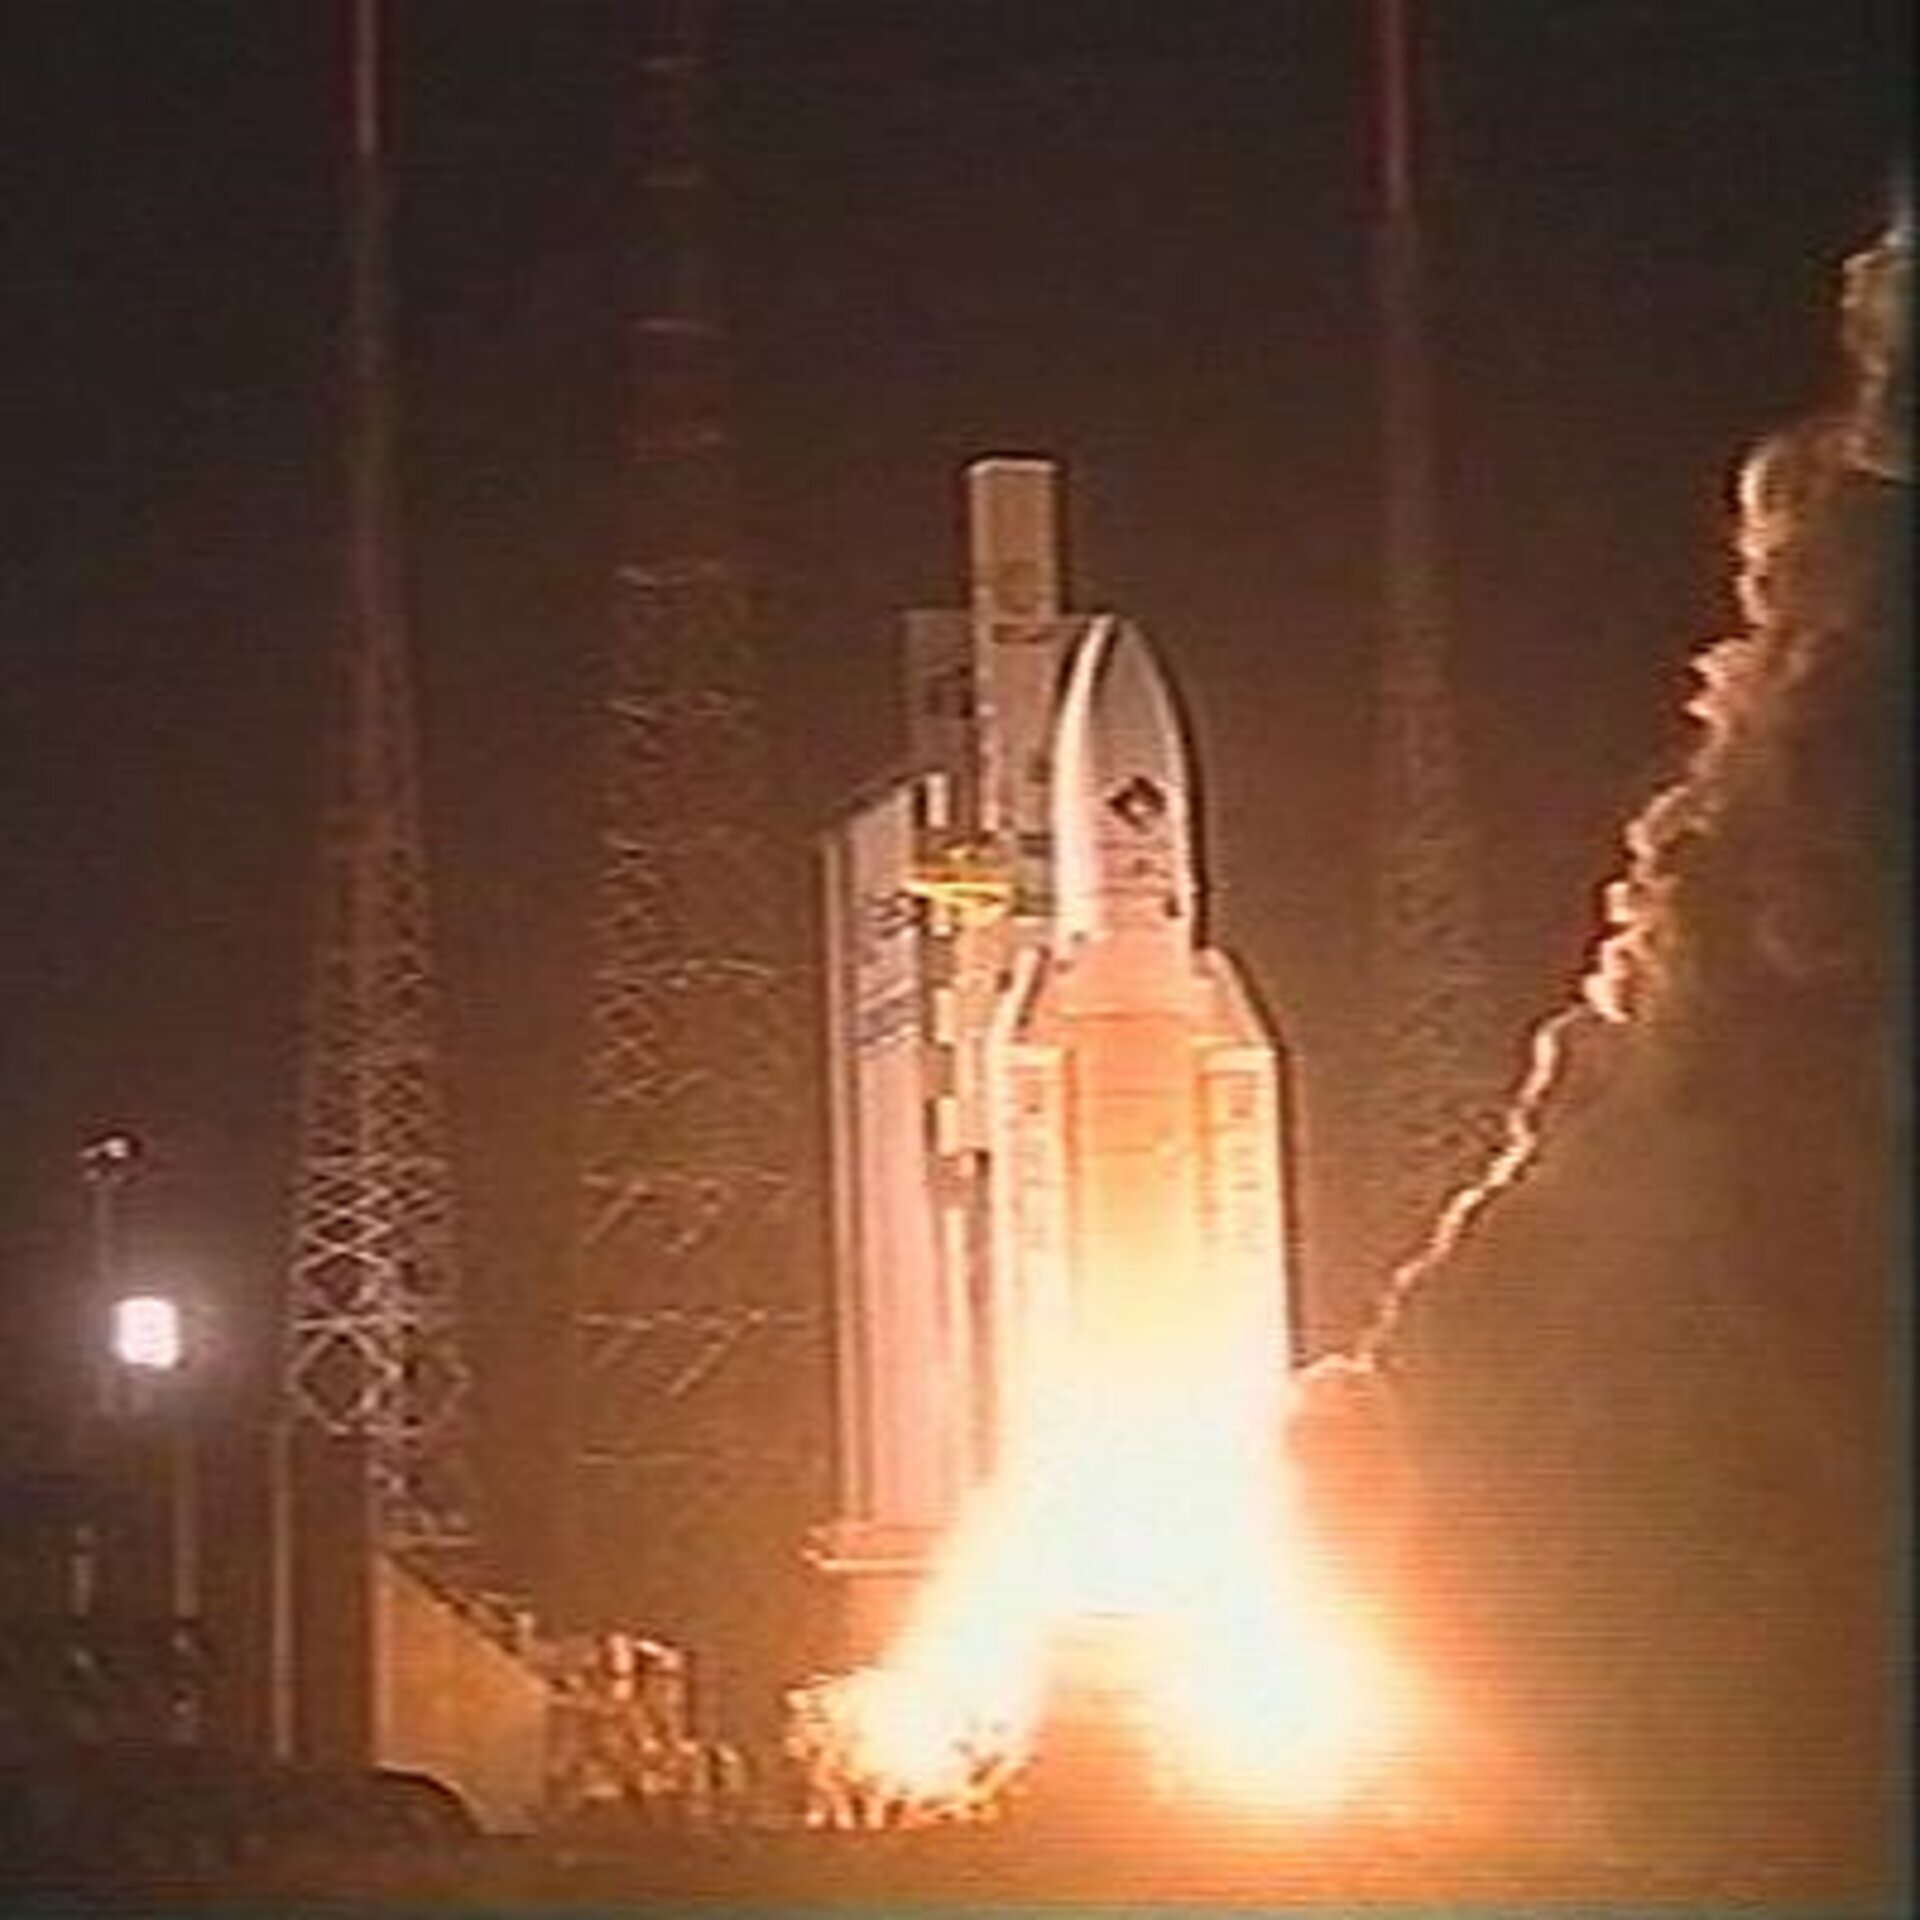 Launch of the Ariane 5 carrying Rosetta